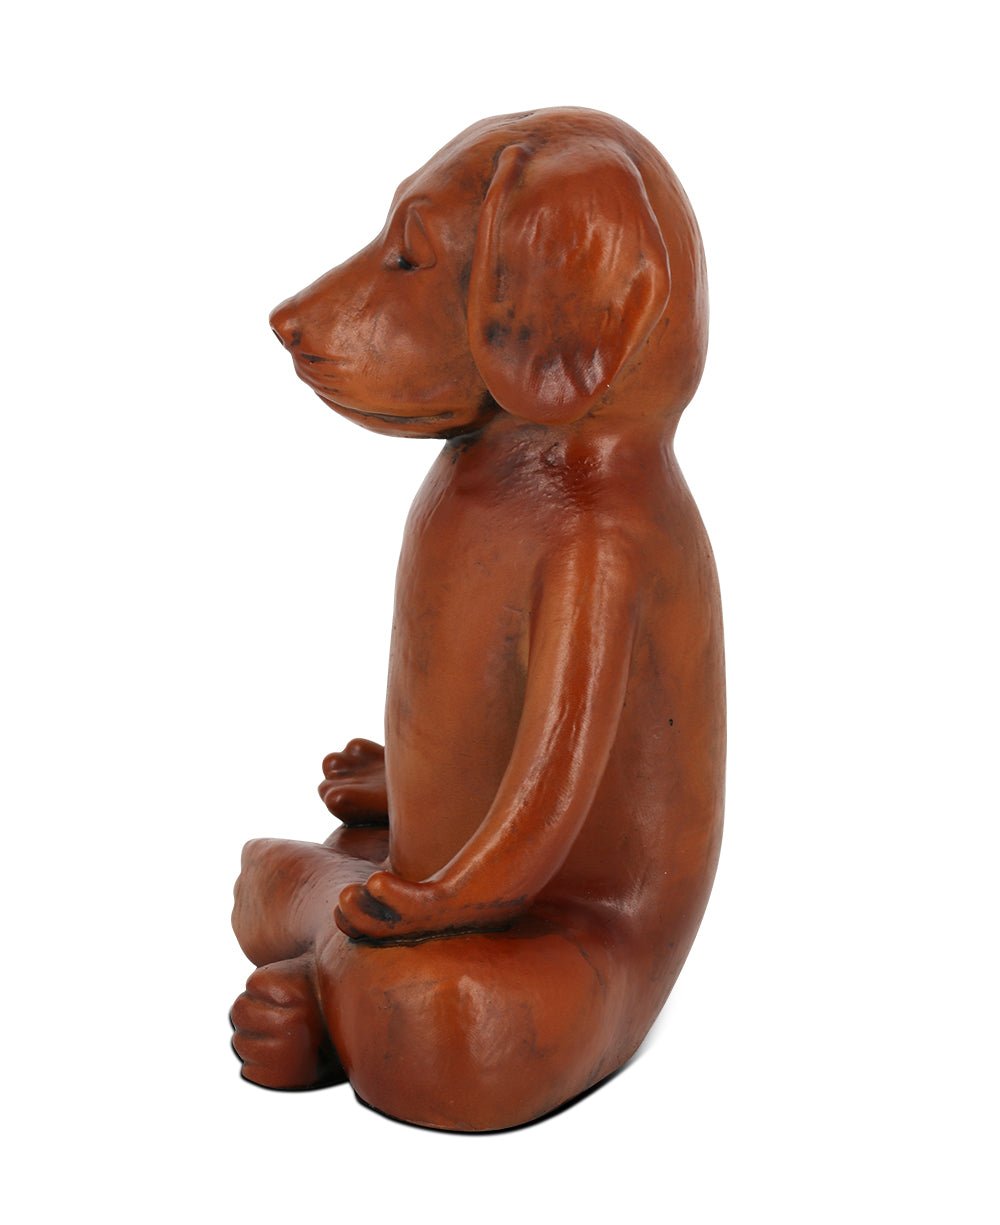 Meditating Dog Statue in Rich Mahogany Tone - Sculptures & Statues